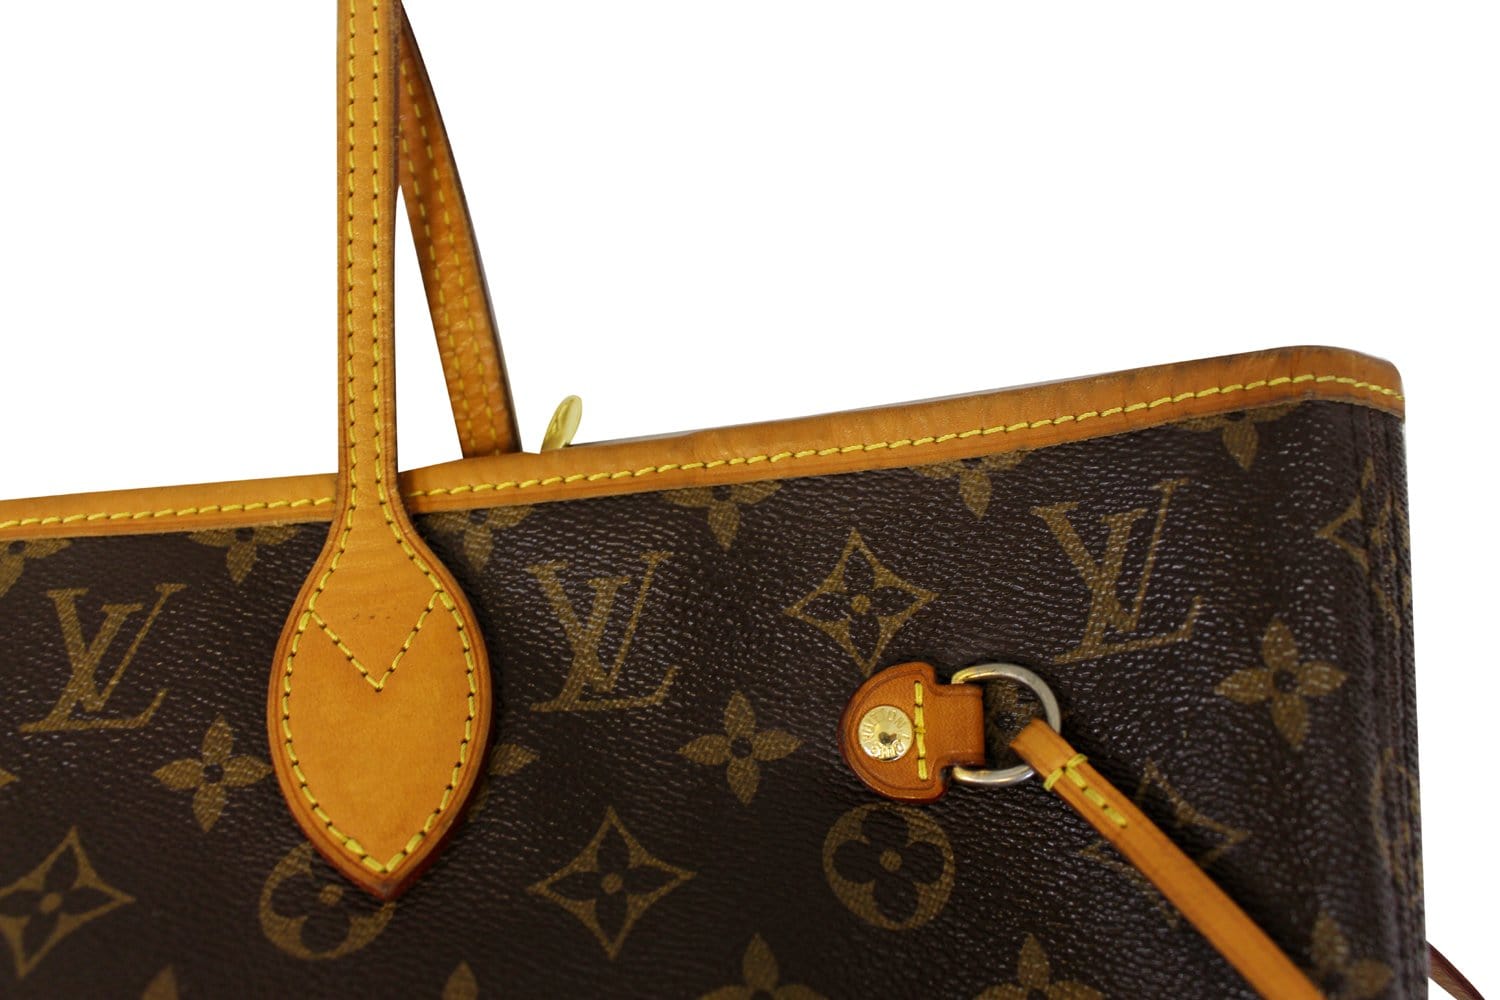 Louis Vuitton Neverfull Pouch in Monogram/Fuchsia – The Bag Broker